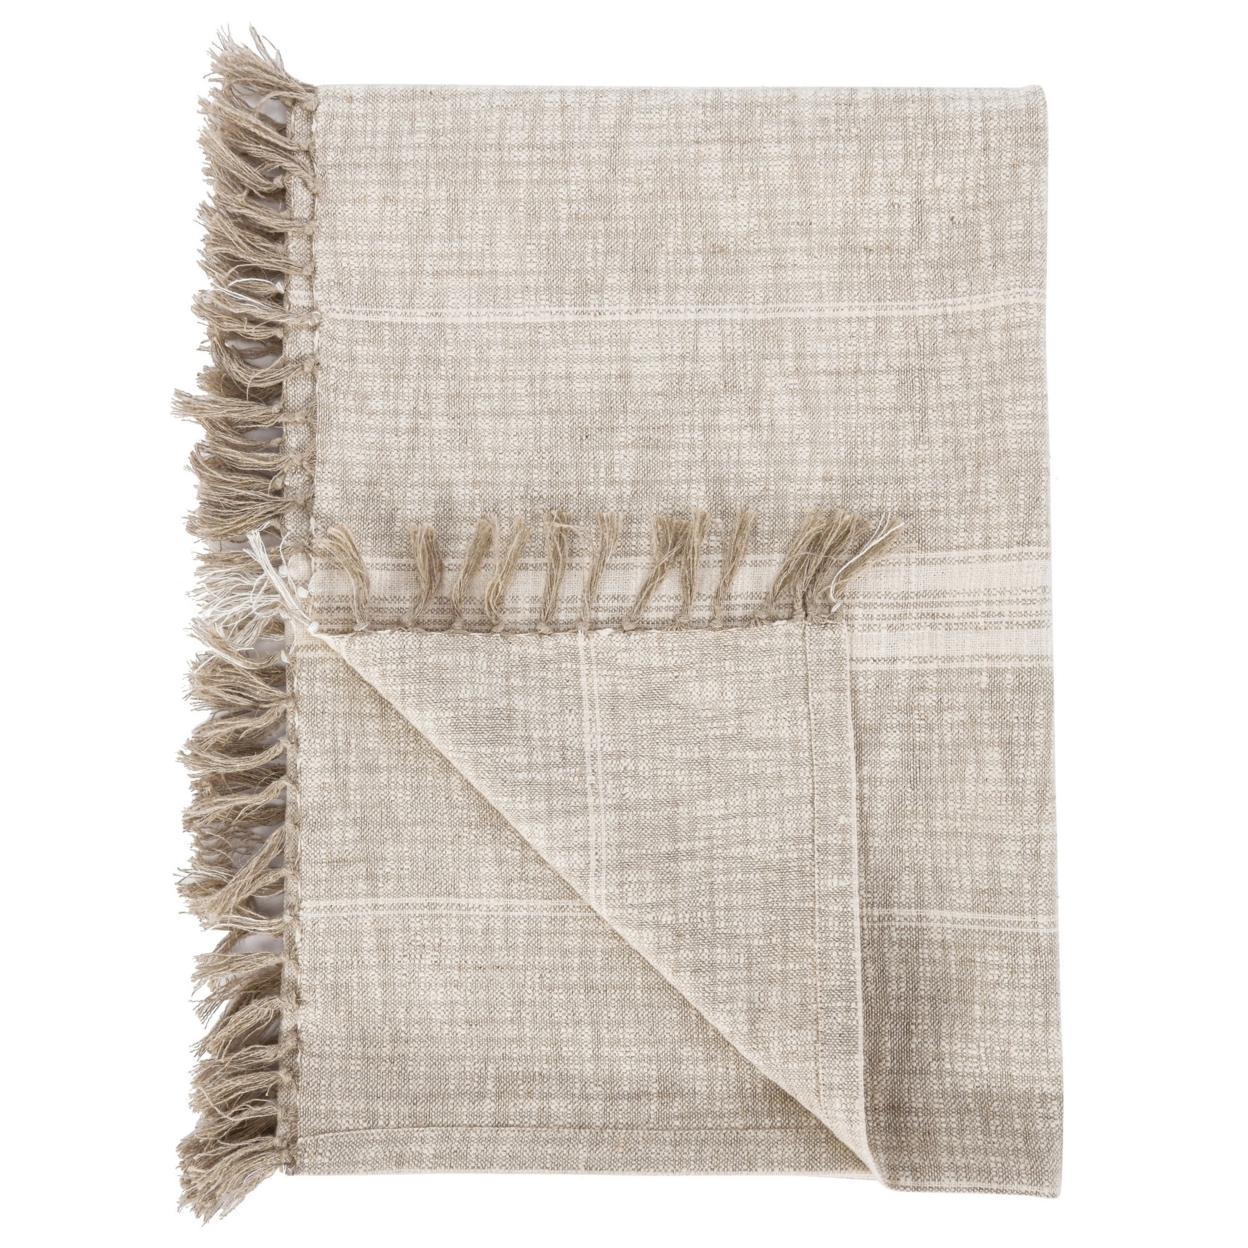 Uno 50 Inch Throw Blanket, Cotton And Linen, Woven Striped Design, Beige- Saltoro Sherpi